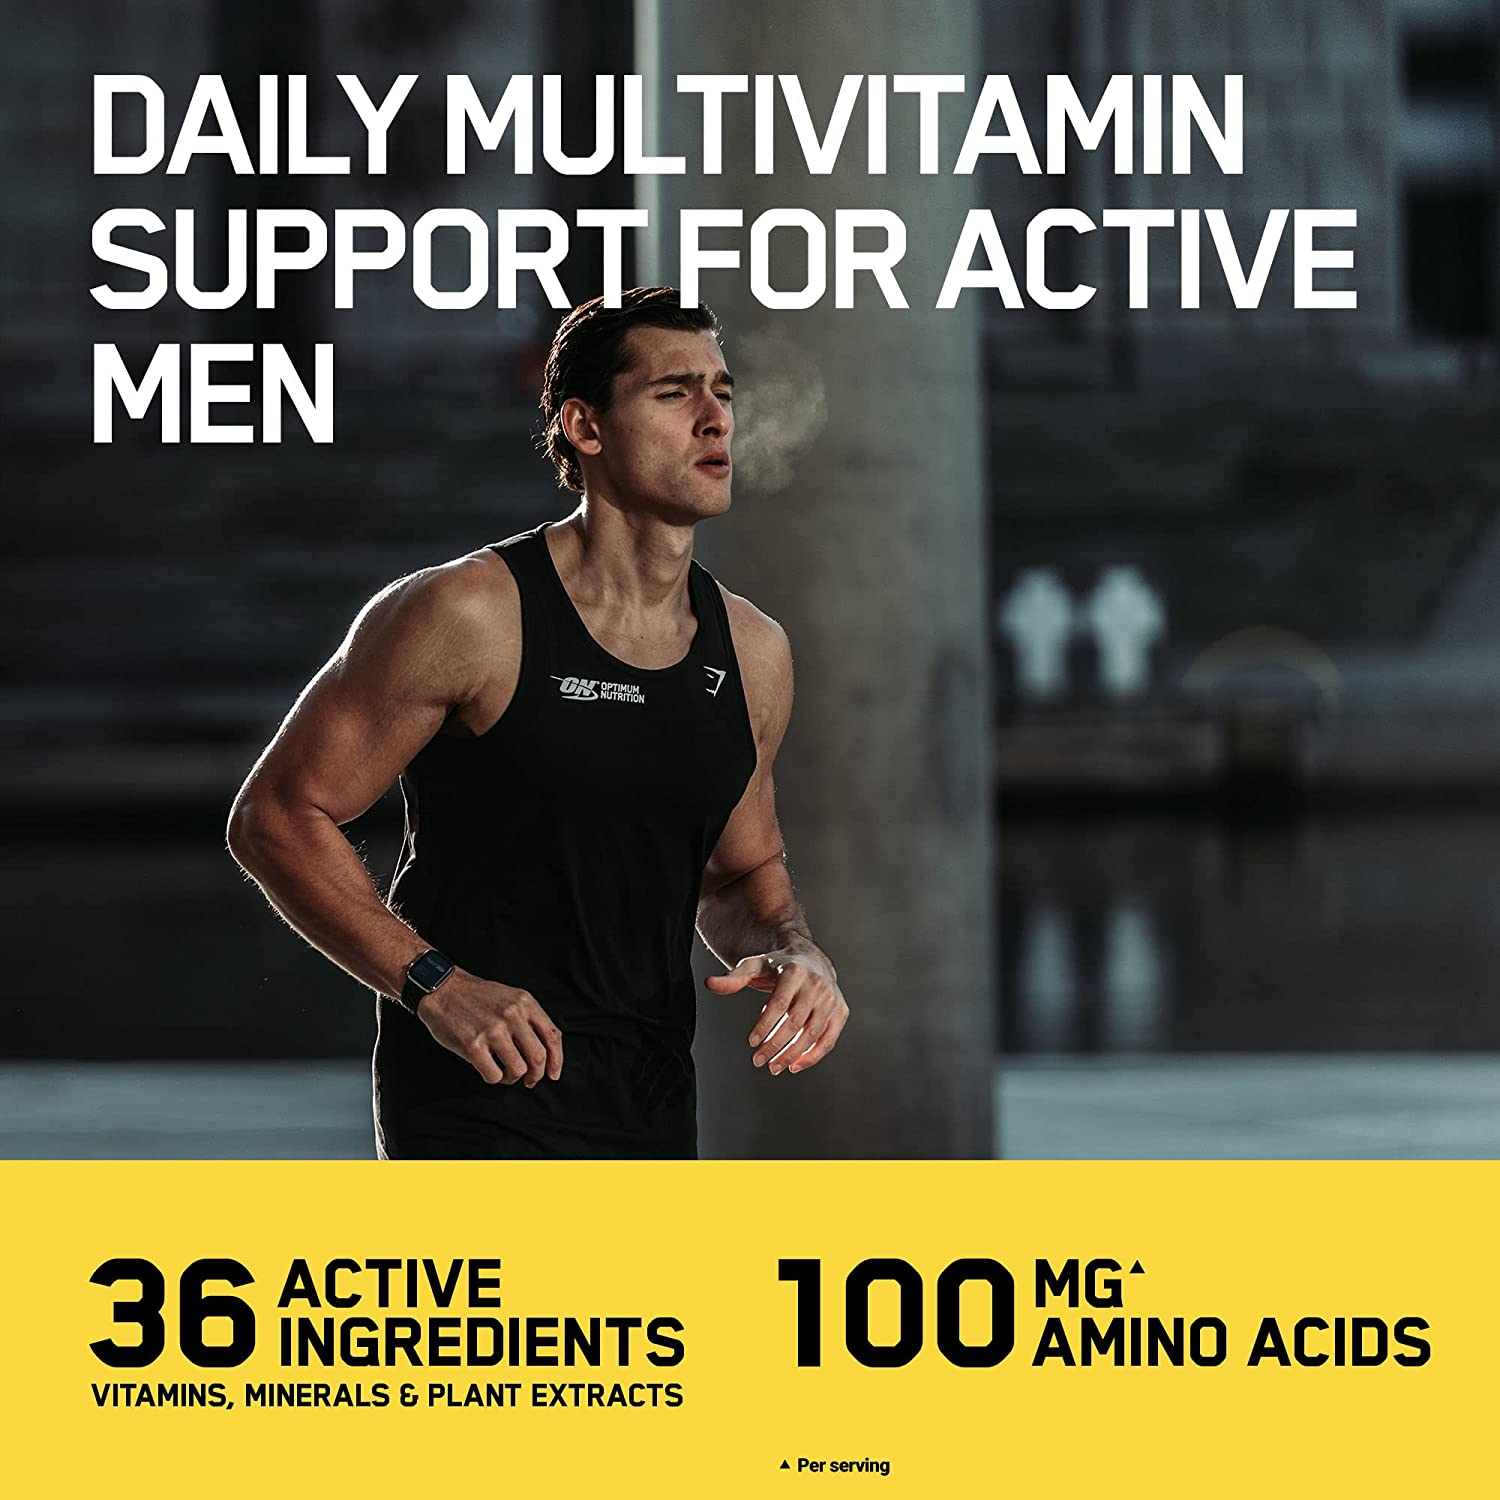 Optimum Nutrition Opti-Men 180 Tablets